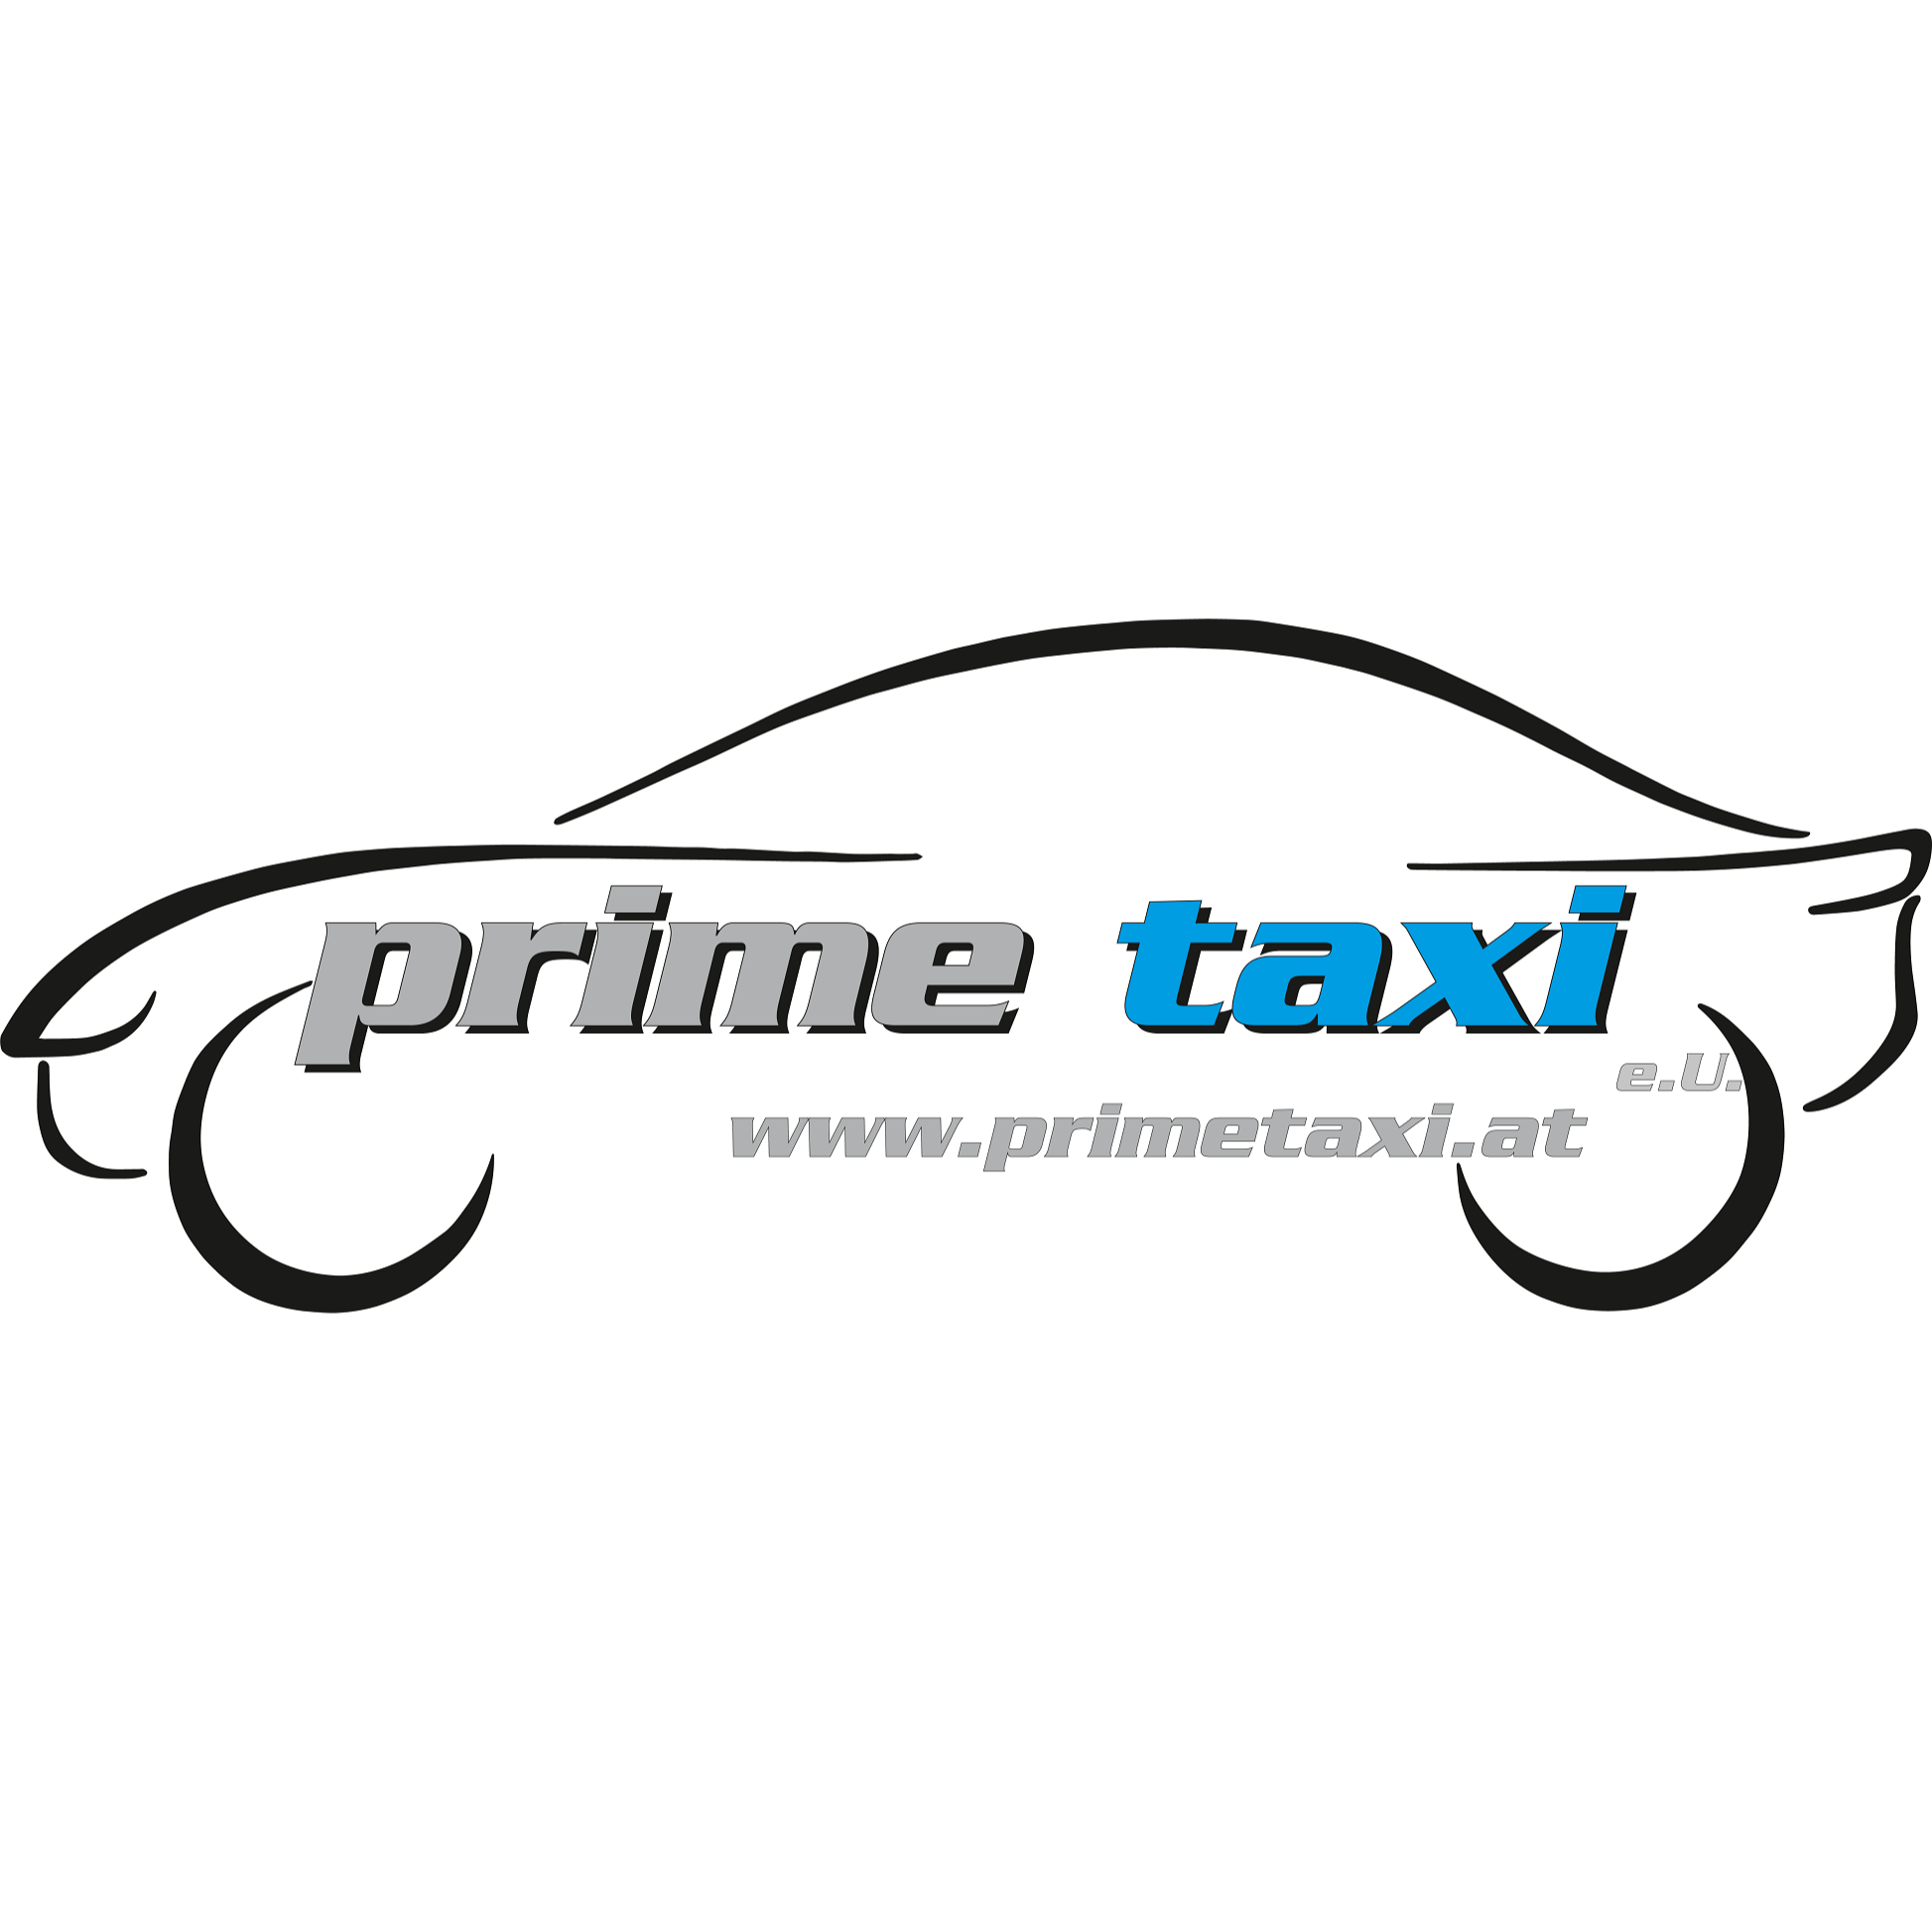 Prime Taxi